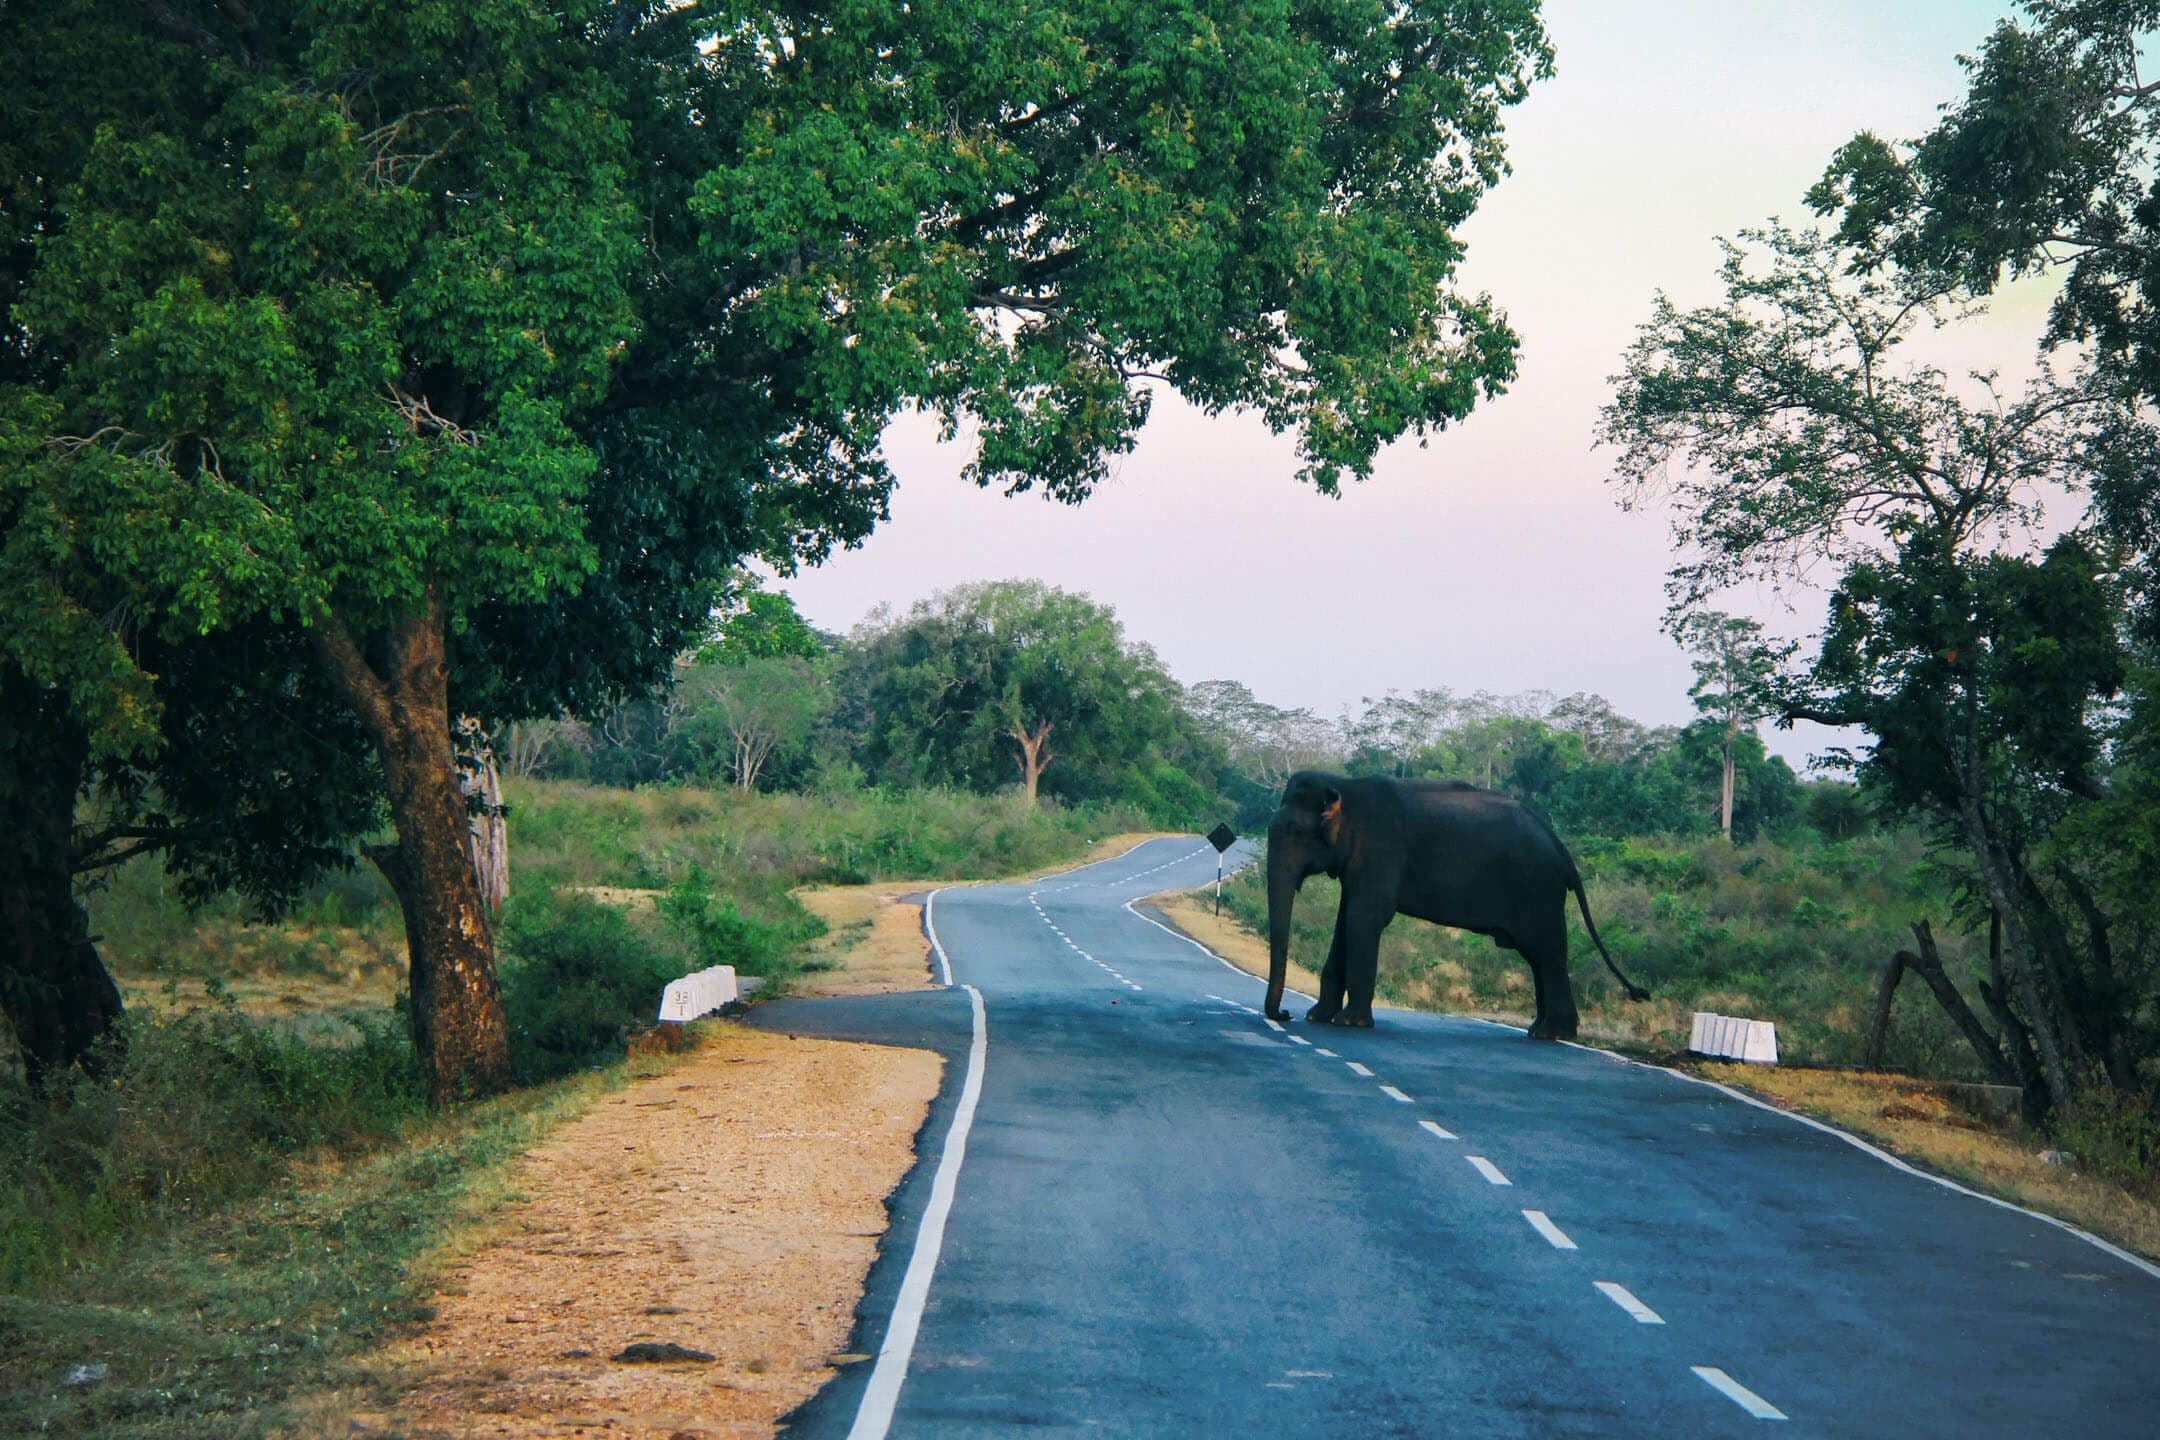 The wild elephant cross the road in cycling path in Yala countryside Sri Lanka